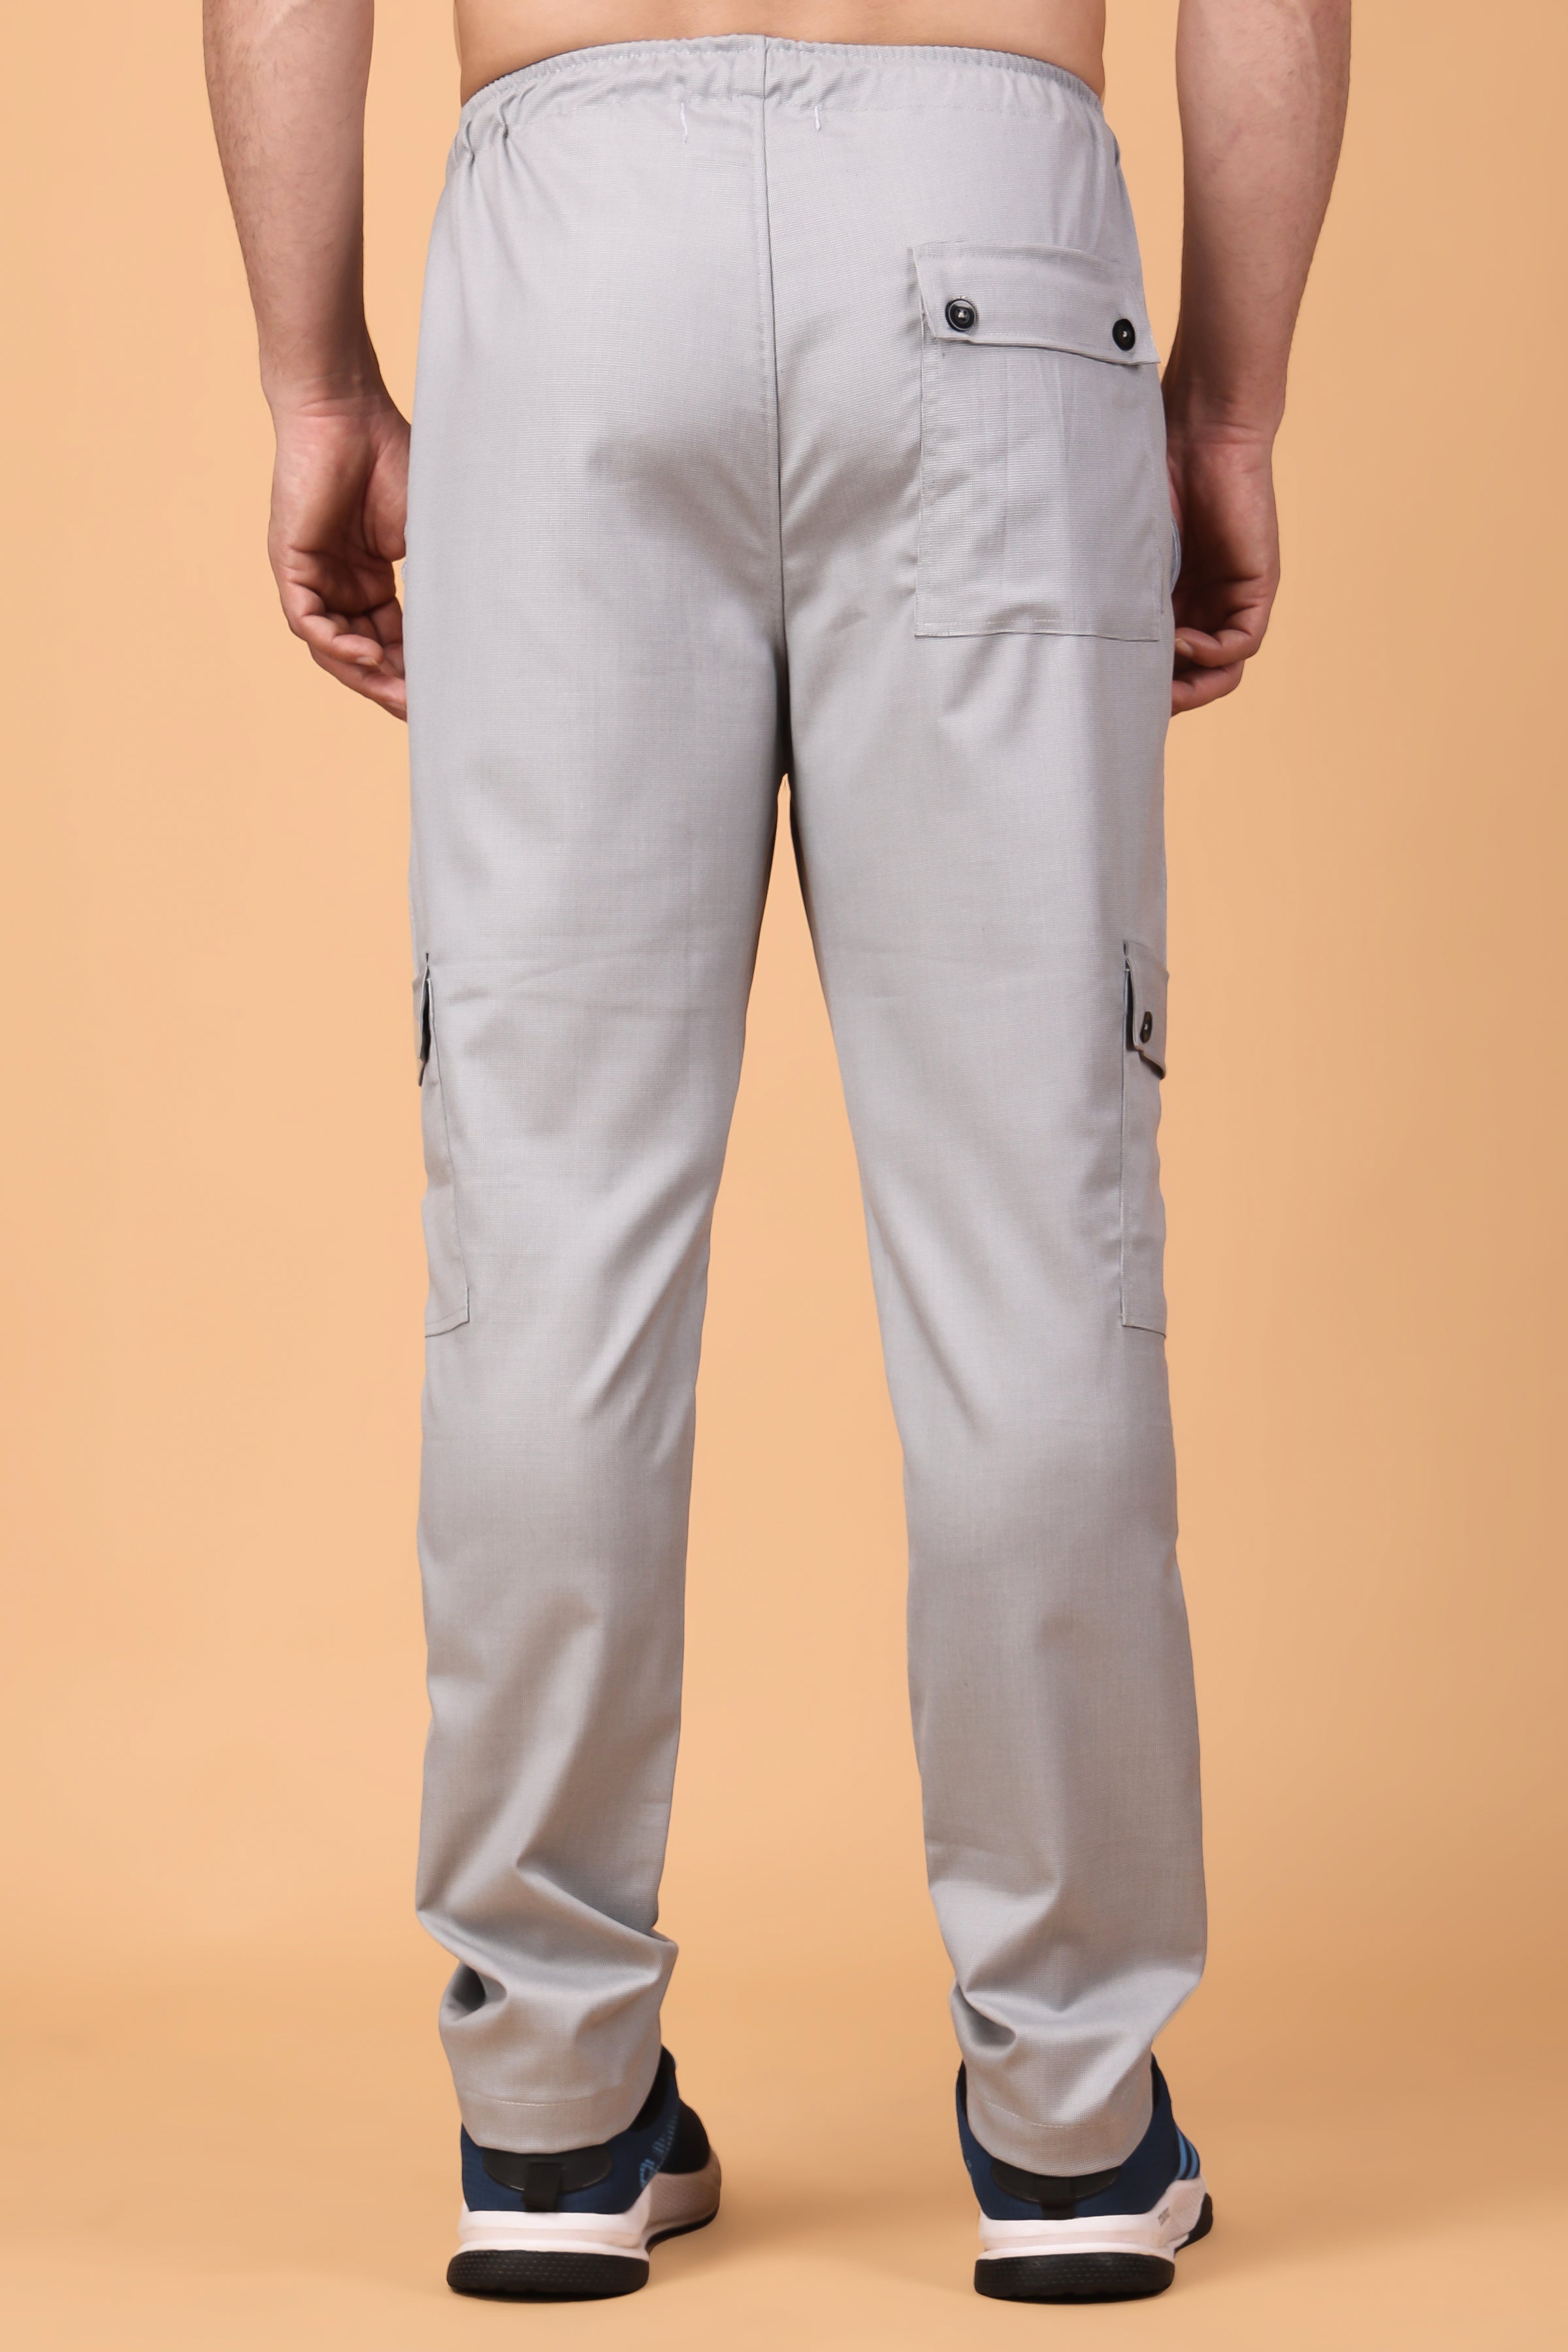 Buy Highlander Folkstone Grey Cargo Trouser for Men Online at Rs.737 - Ketch